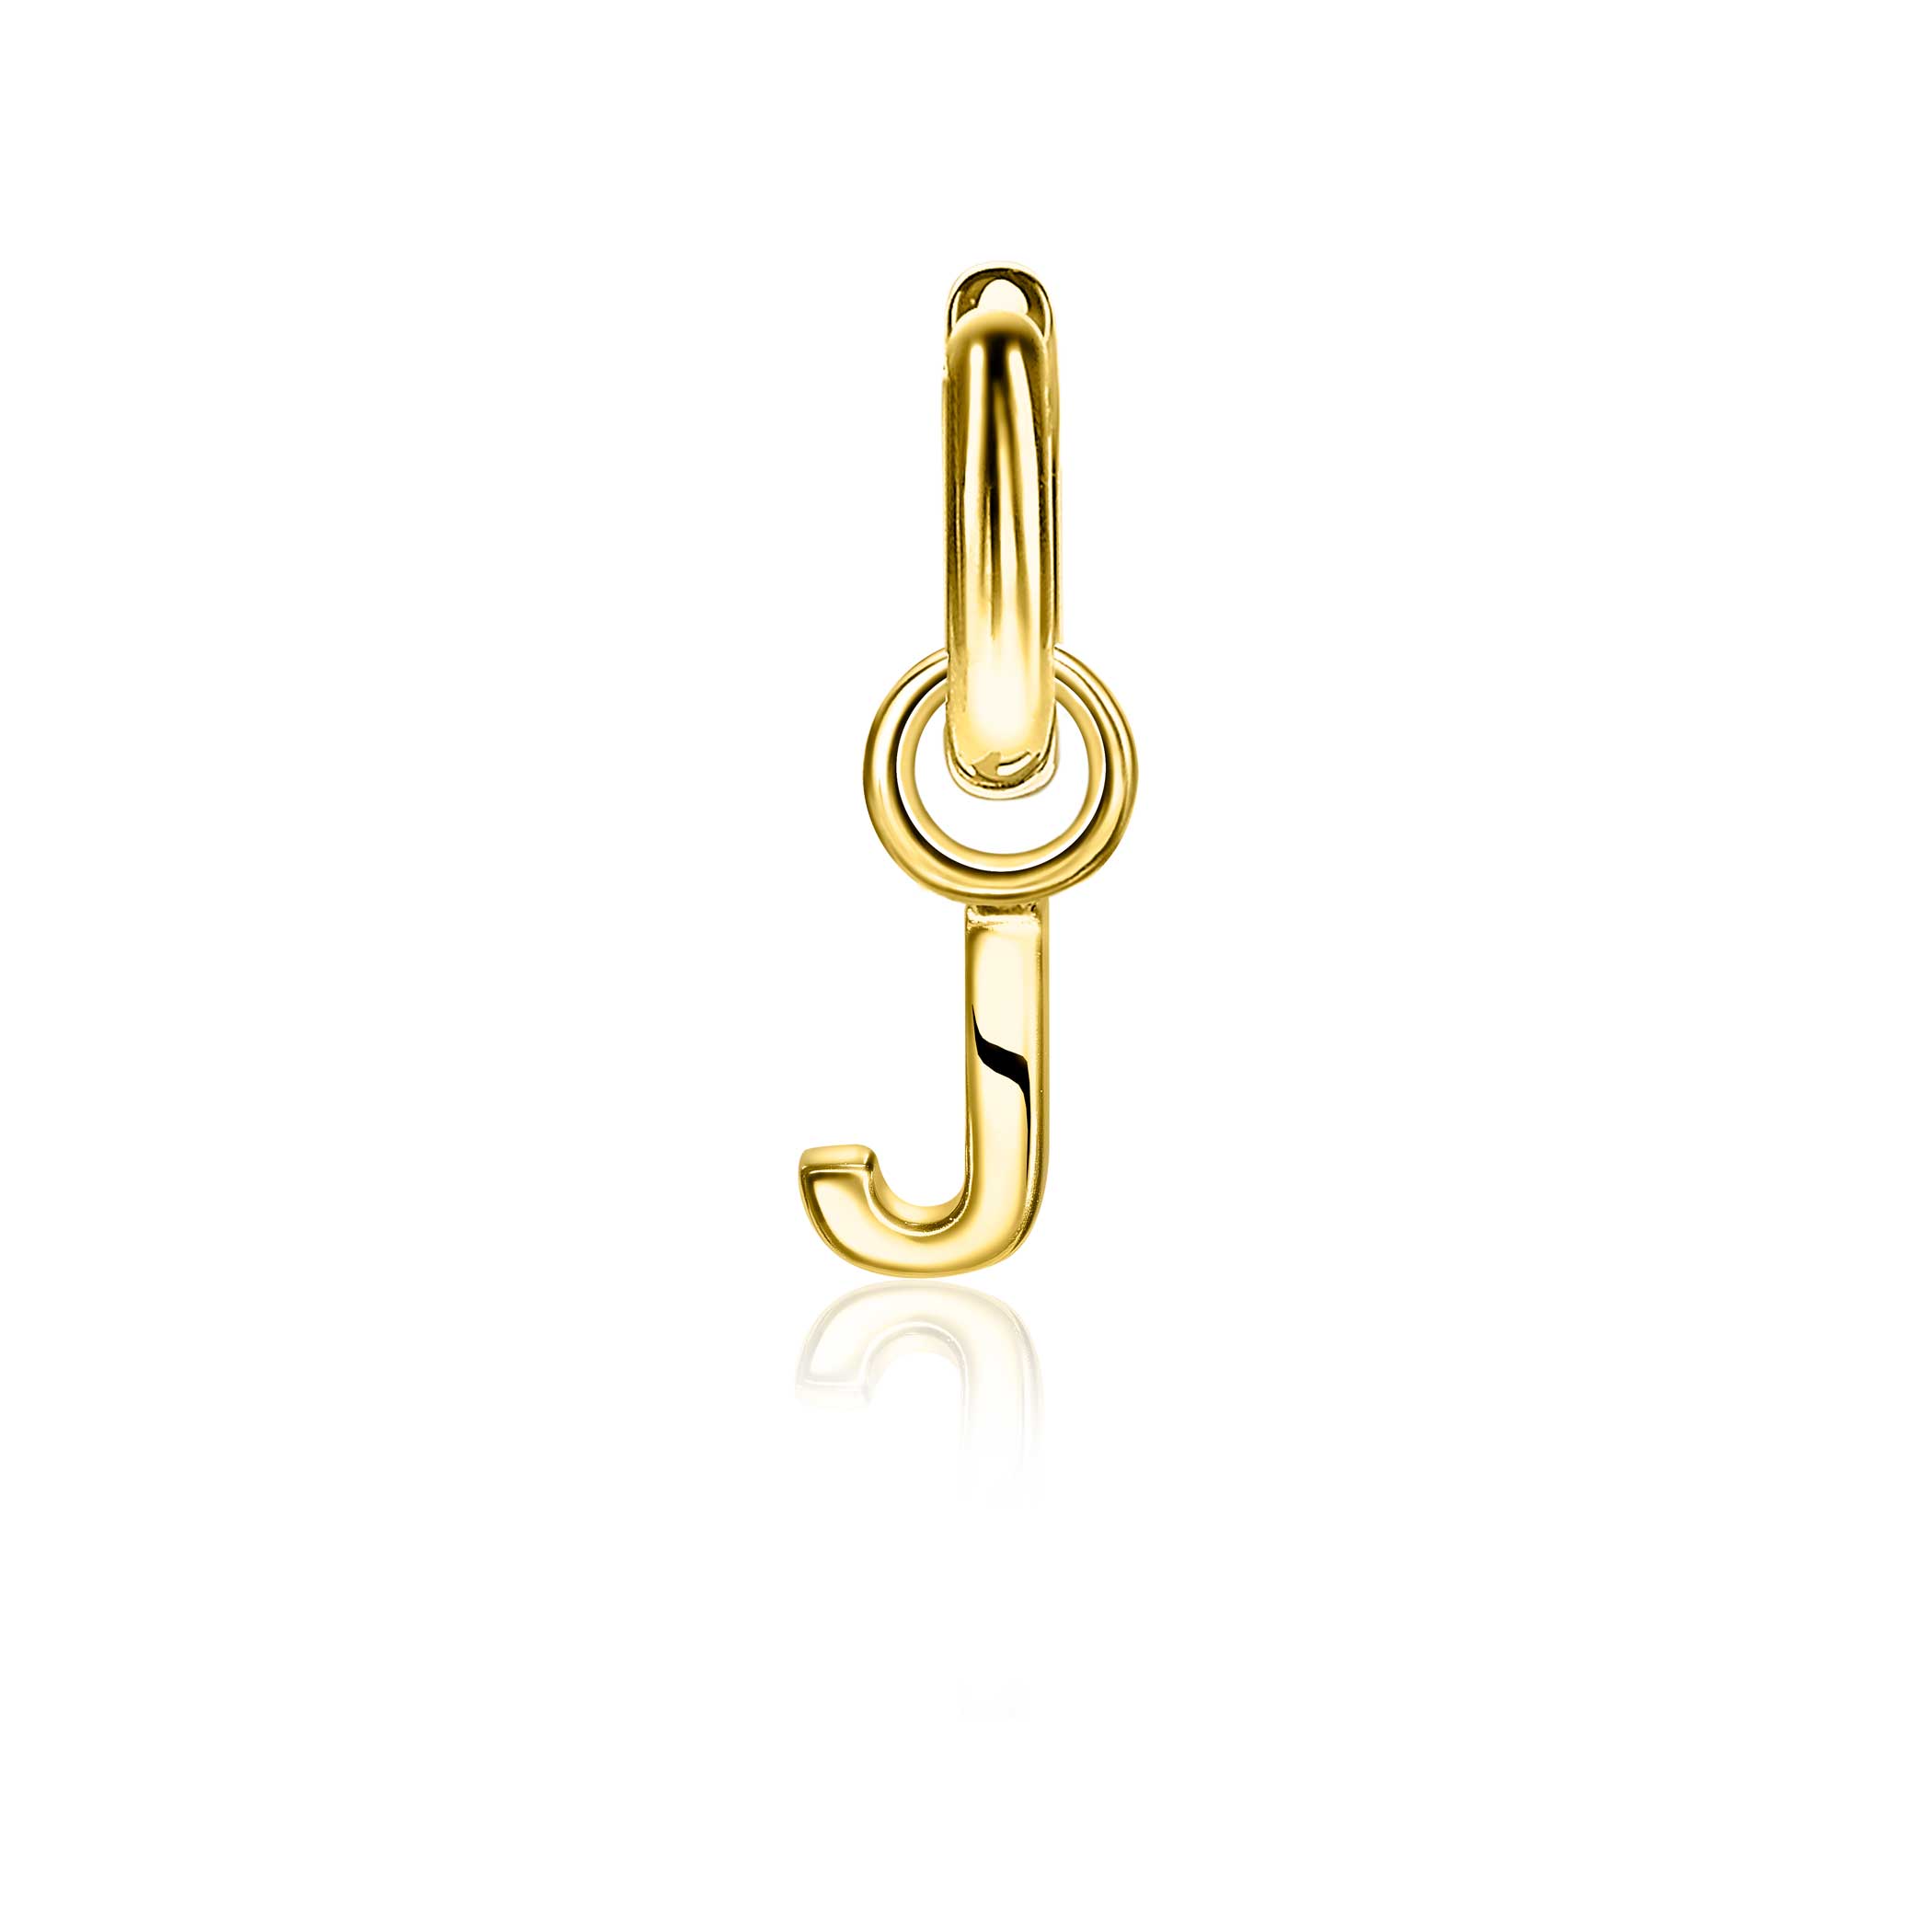 ZINZI Gold Plated Letter Earrings Pendant J price per piece ZICH2145J (excl. hoop earrings)